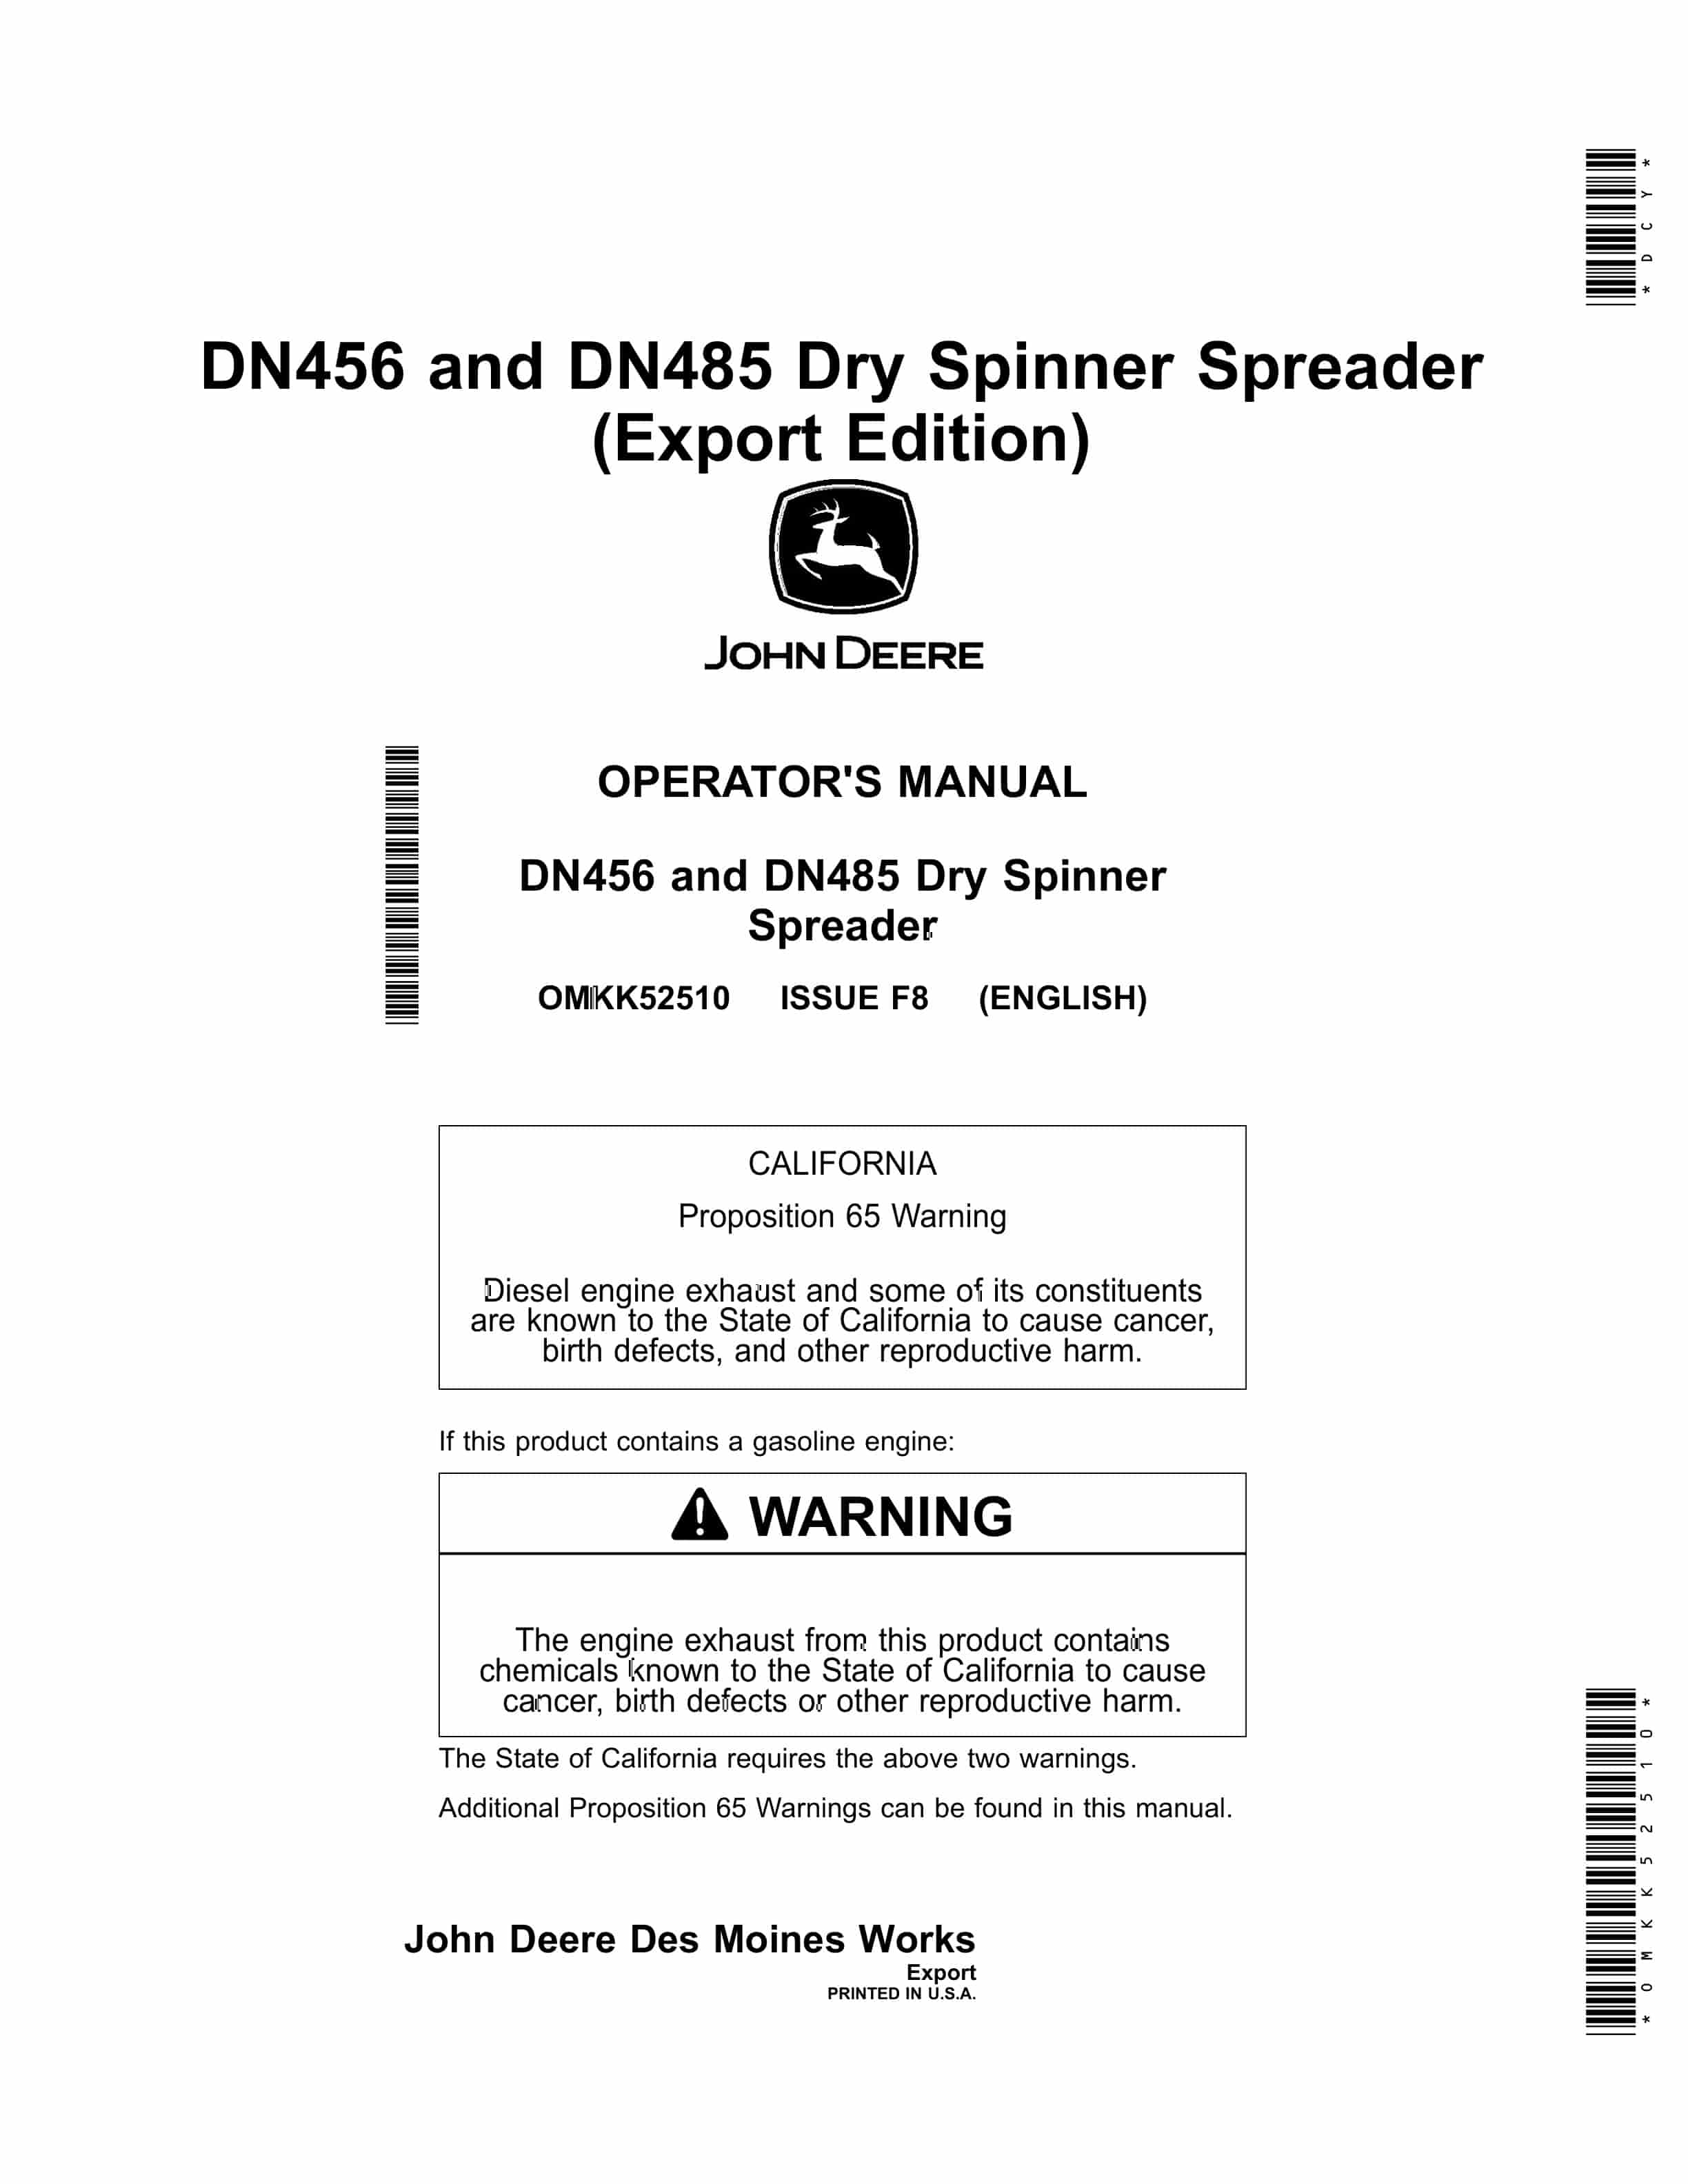 John Deere DN456 and DN485 Dry Spinner Spreader Operator Manual OMKK52510 1